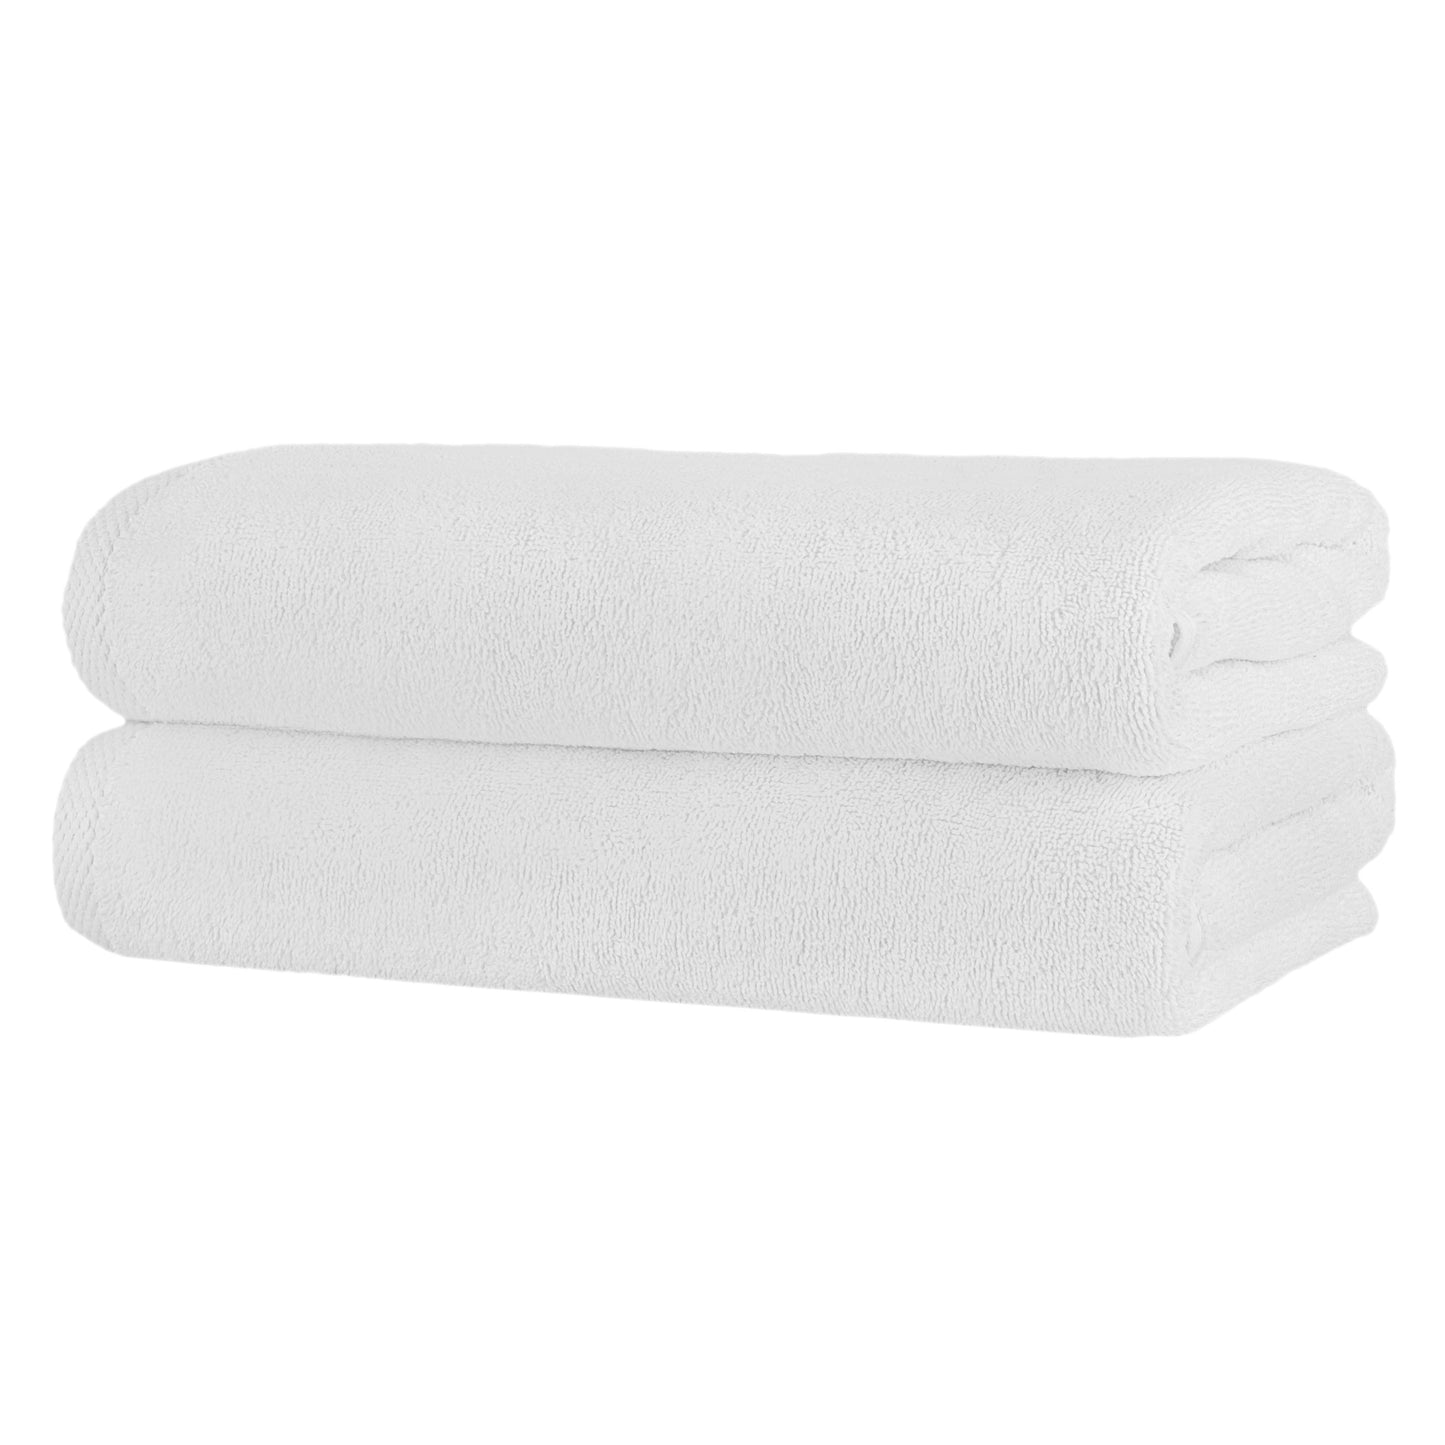 NINE WEST - Premium Luxury Hotel Collection 2 Bath Towels 28X54 - White - Classic Turkish Towels